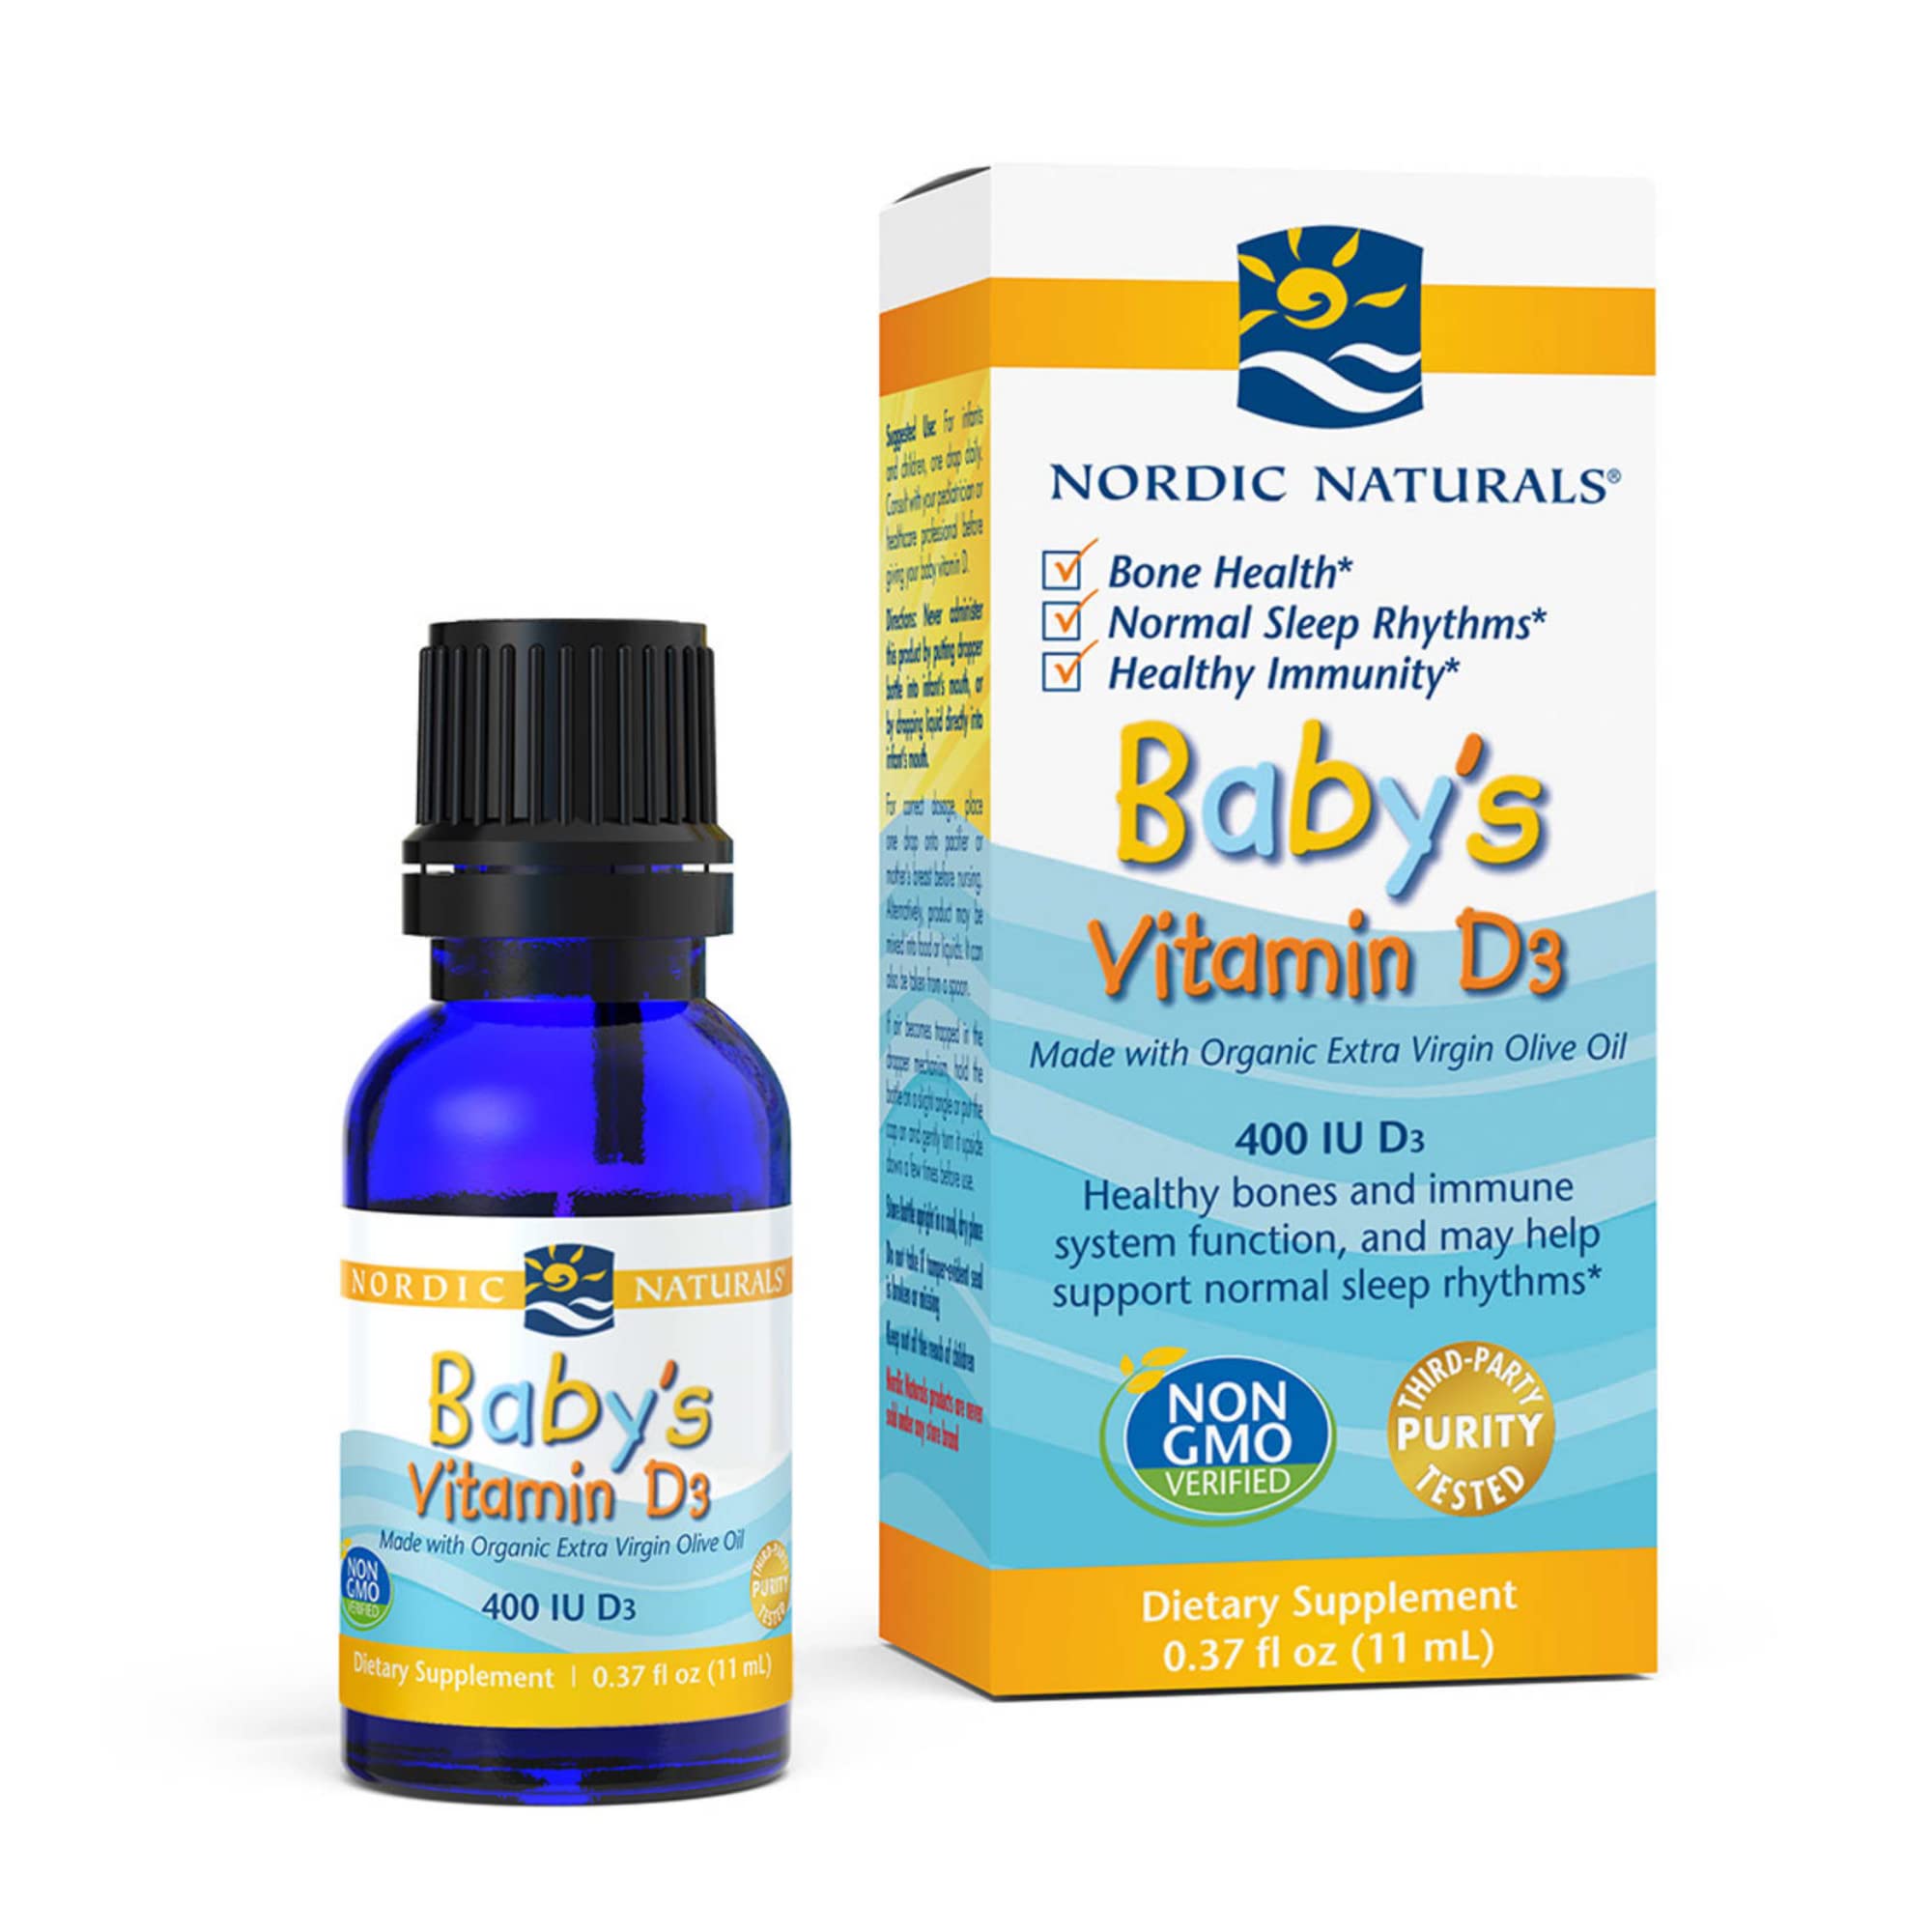 Nordic Naturals Baby’s Vitamin D3, Unflavored - 400 IU Vitamin D3 - 0.37 oz - Healthy Bones, Immune System Support, Normal Sleep Rhythms - Non-GMO, Certified Vegetarian - 365 Servings